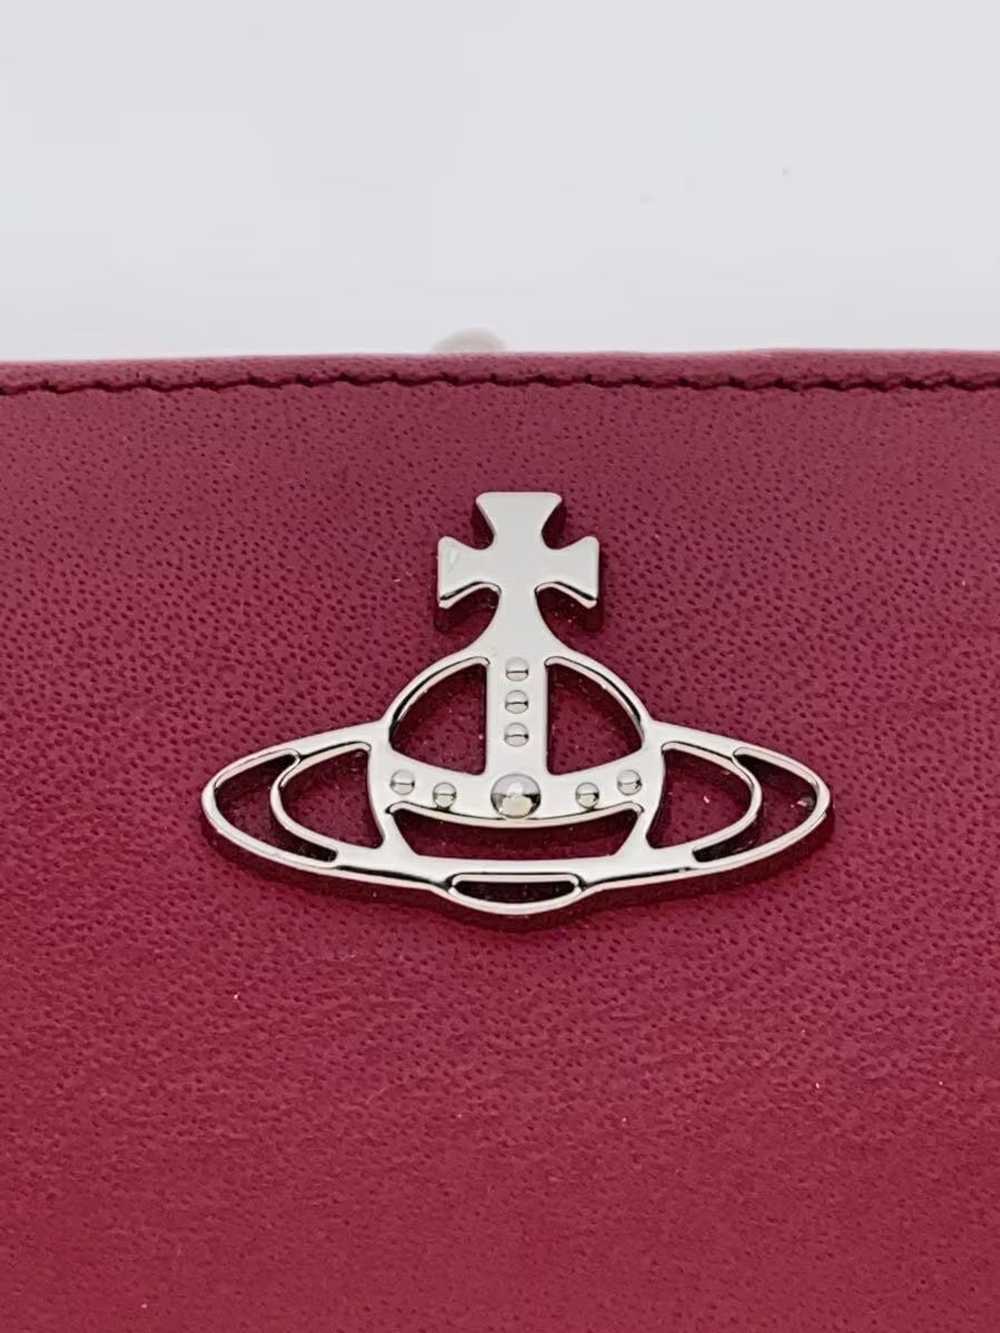 Vivienne Westwood Orb Badge Leather Wallet - image 4